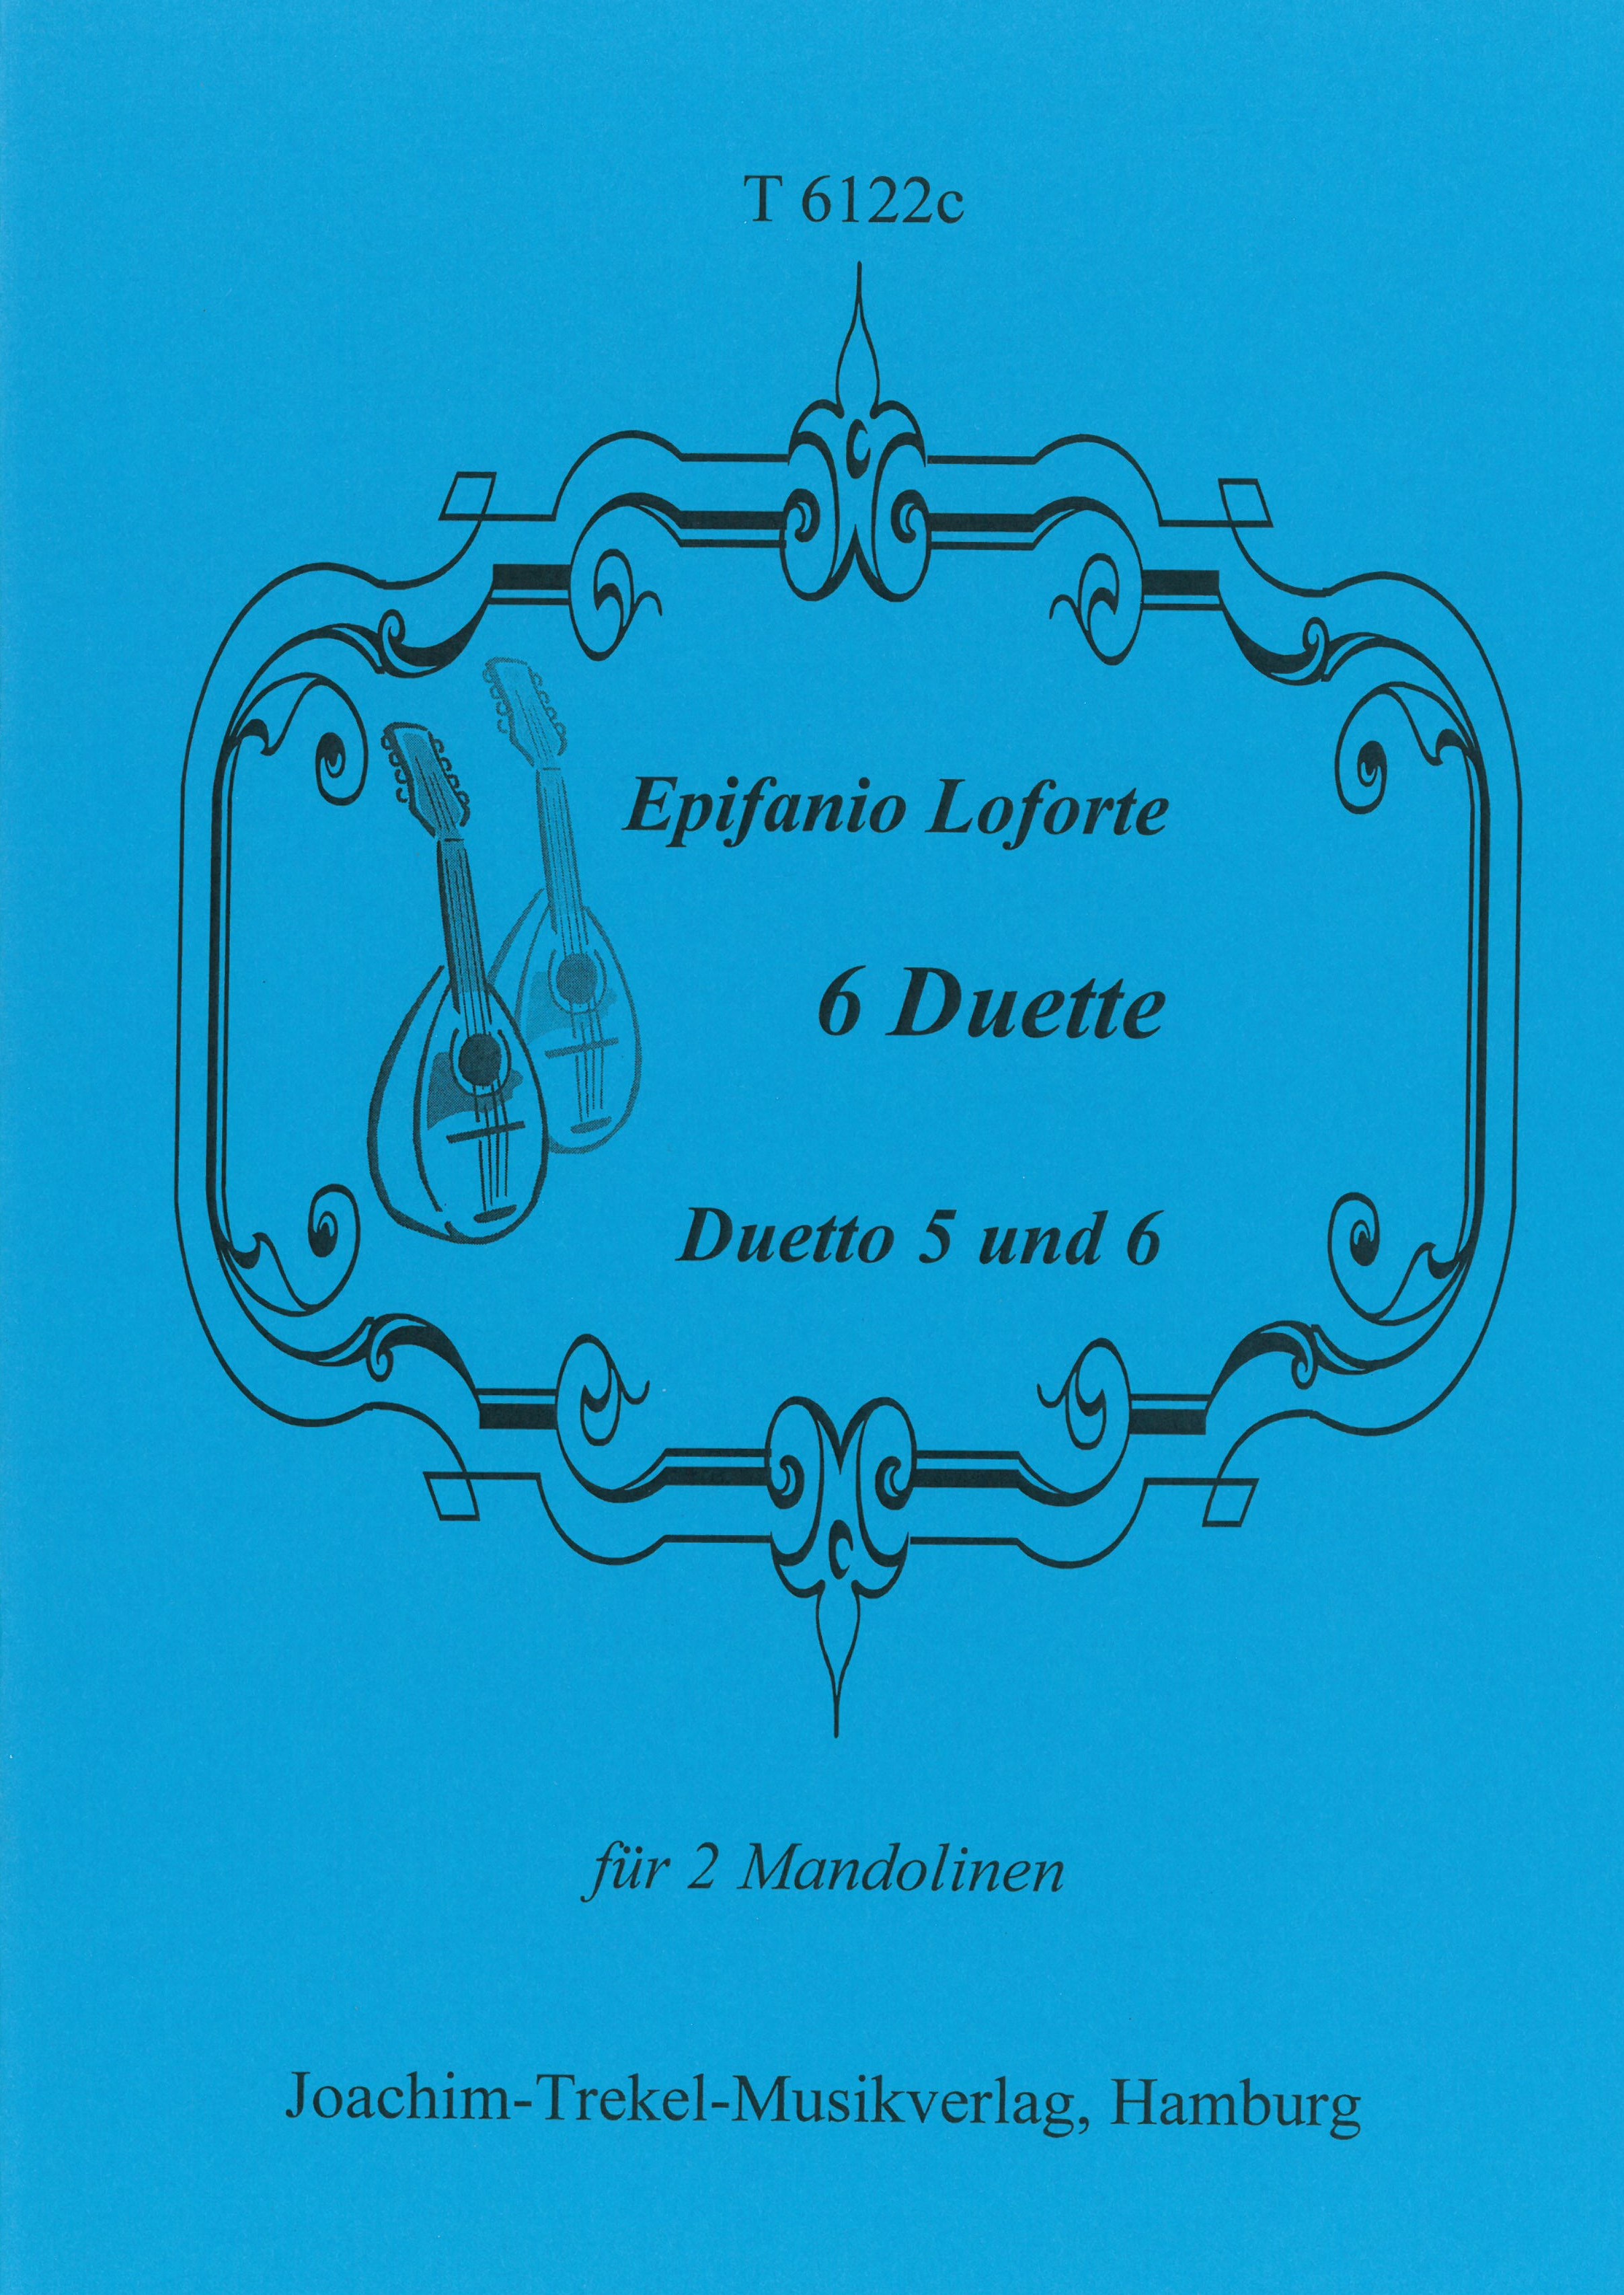 6 Duette: Duetto 5 und 6